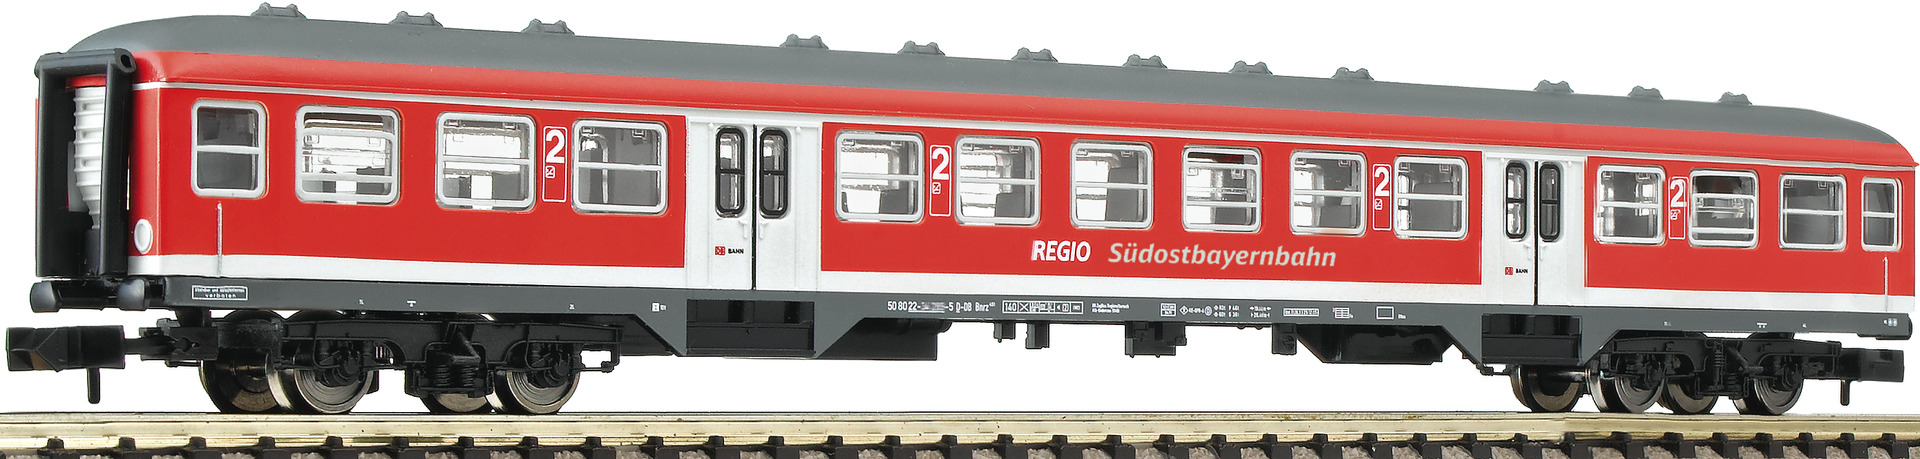 Fleischmann 814803 DBAG Bnrz451 Sudostbayernbahn 2nd Class Coach VI